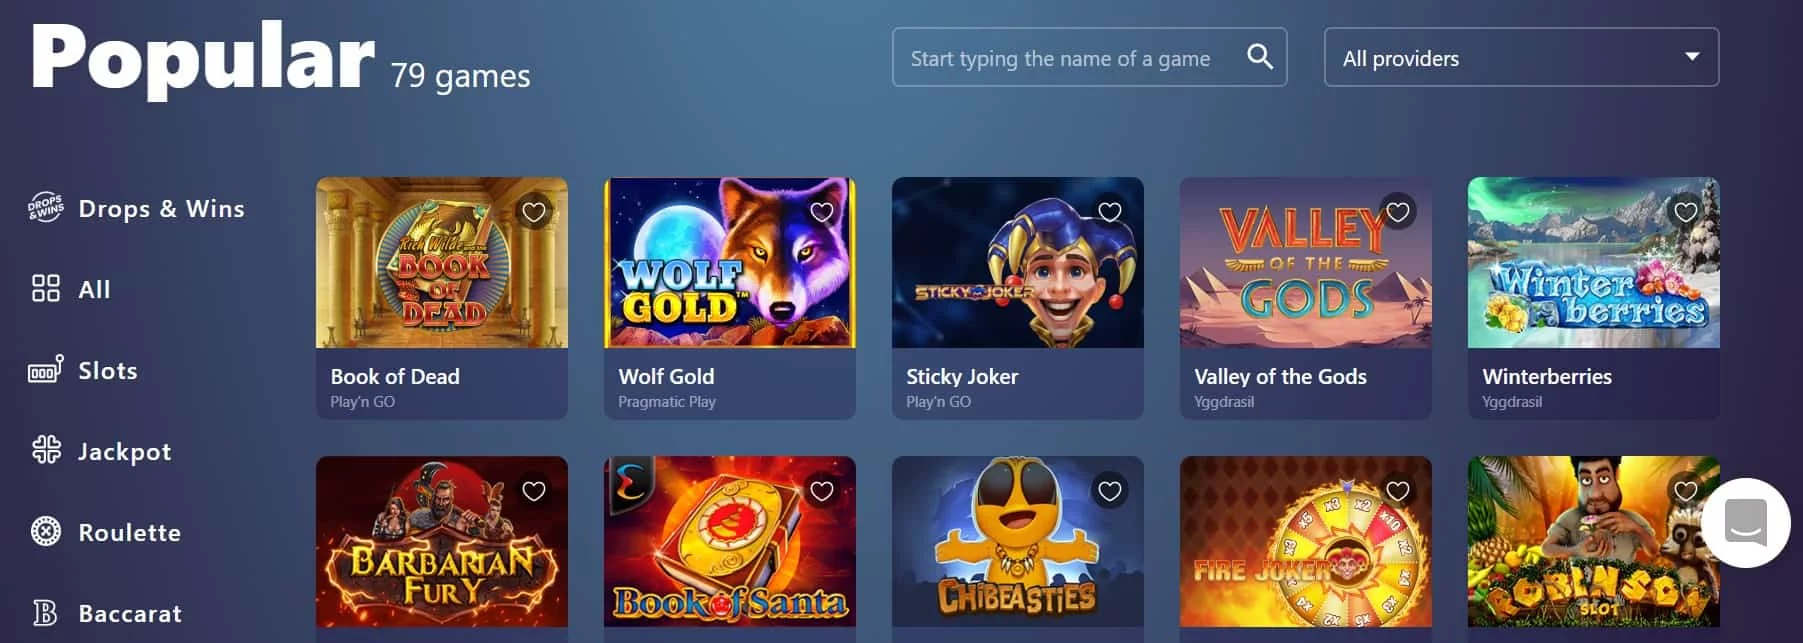 Casinoin popular games